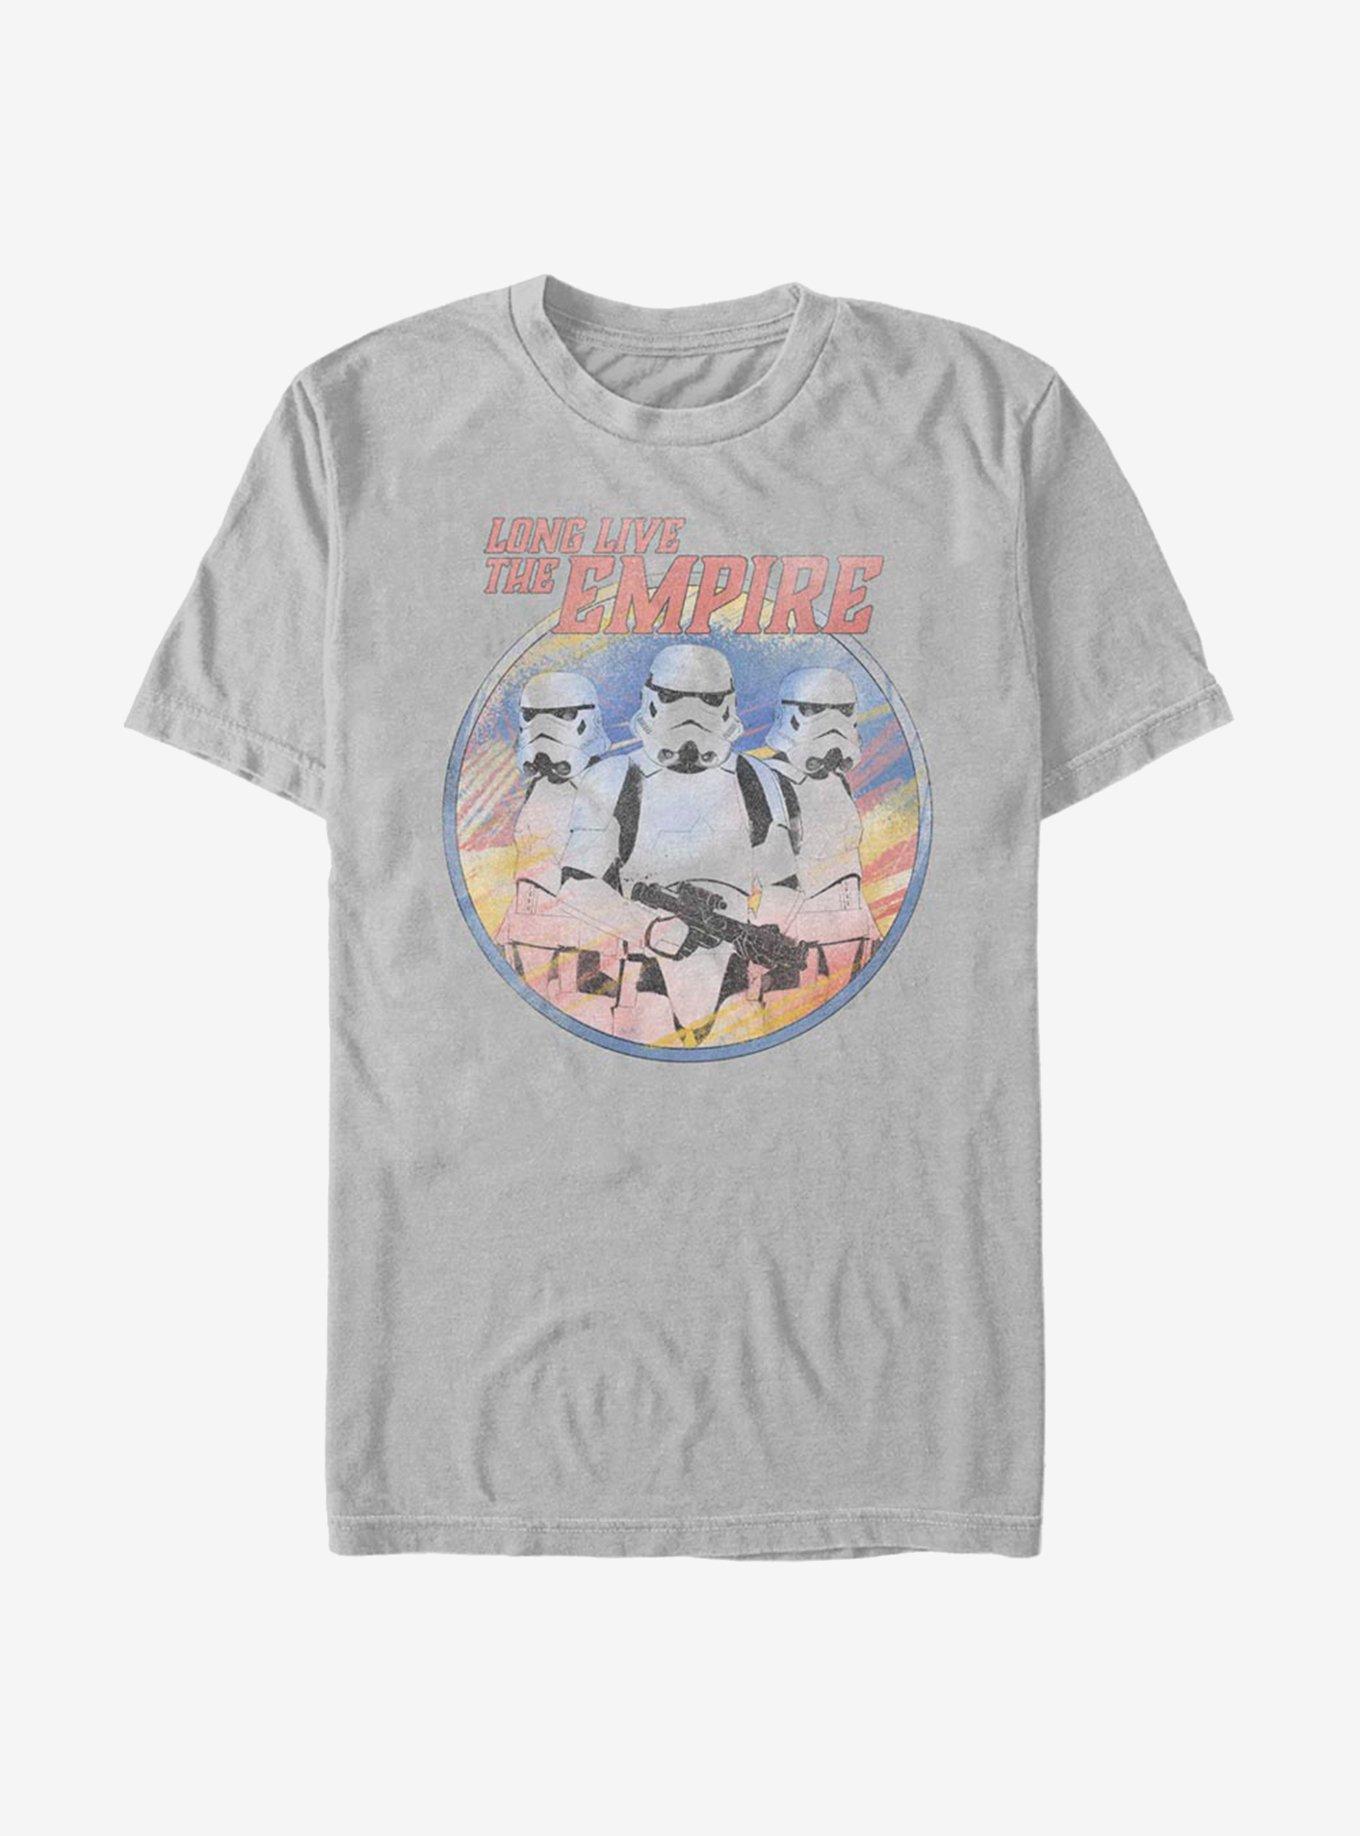 Extra Soft Star Wars The Mandalorian Long Live Empire T-Shirt